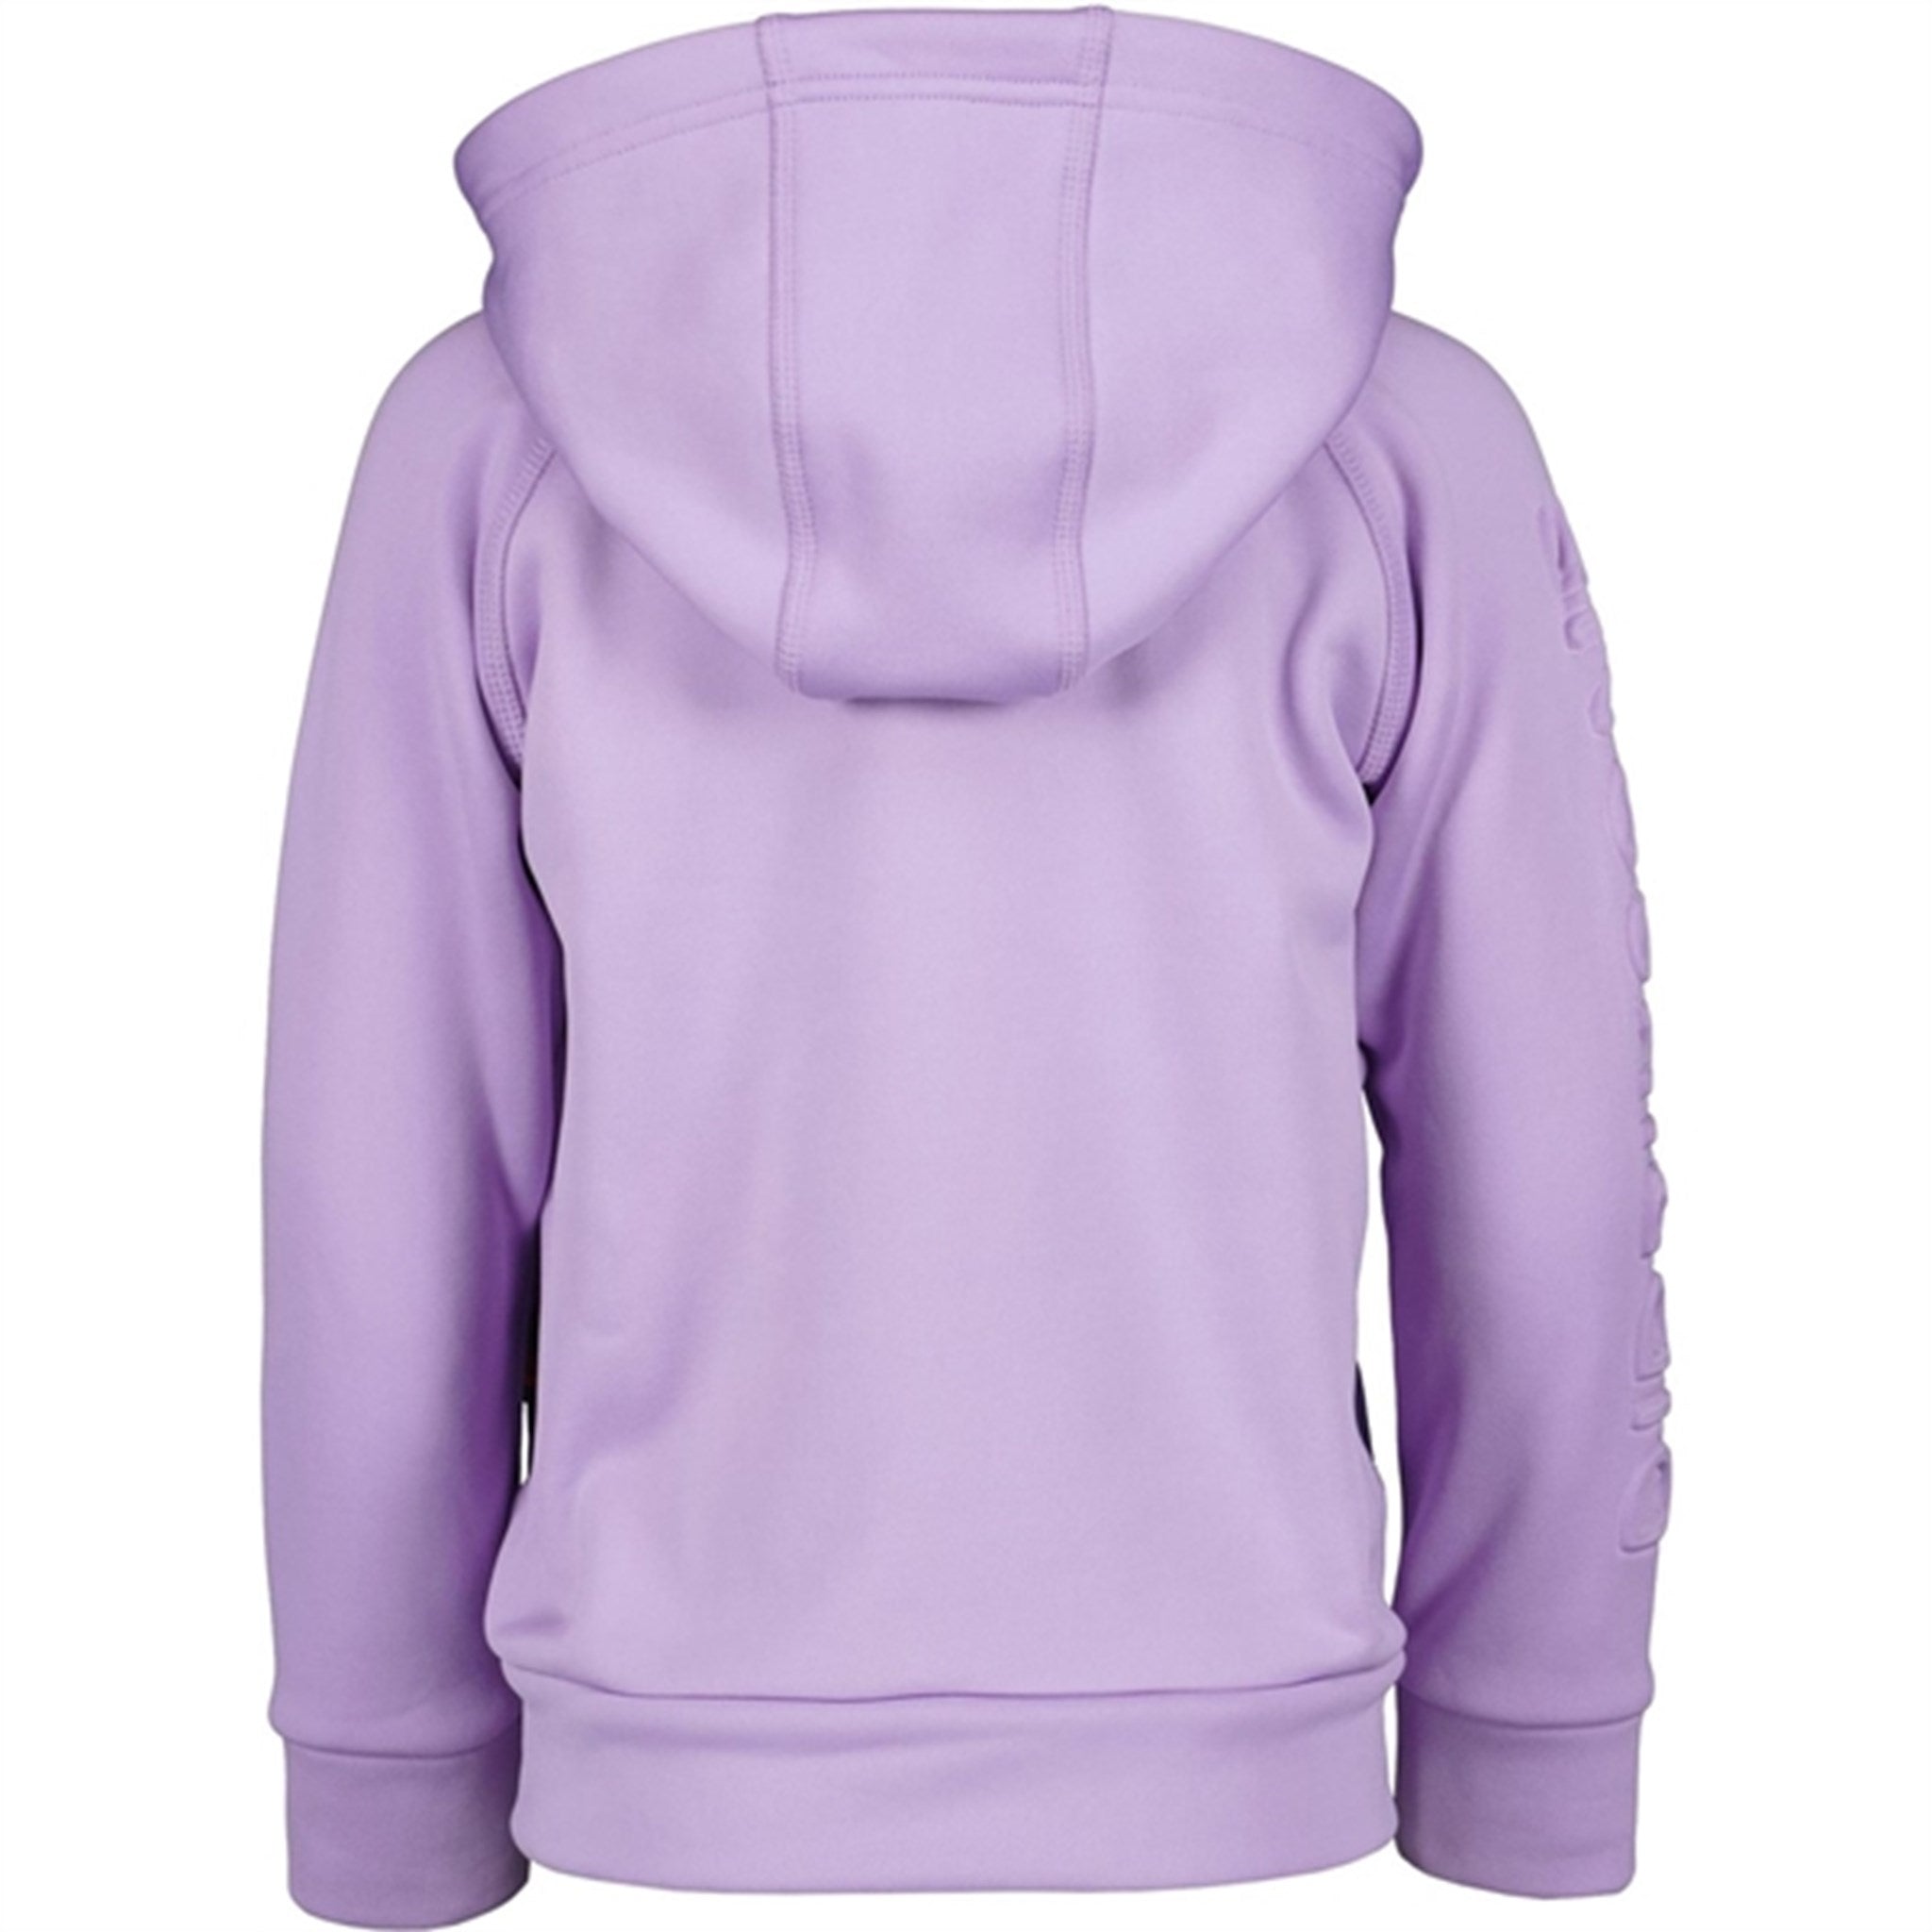 Didriksons Corinv Digital Purple Sweatshirt with Zipper 6